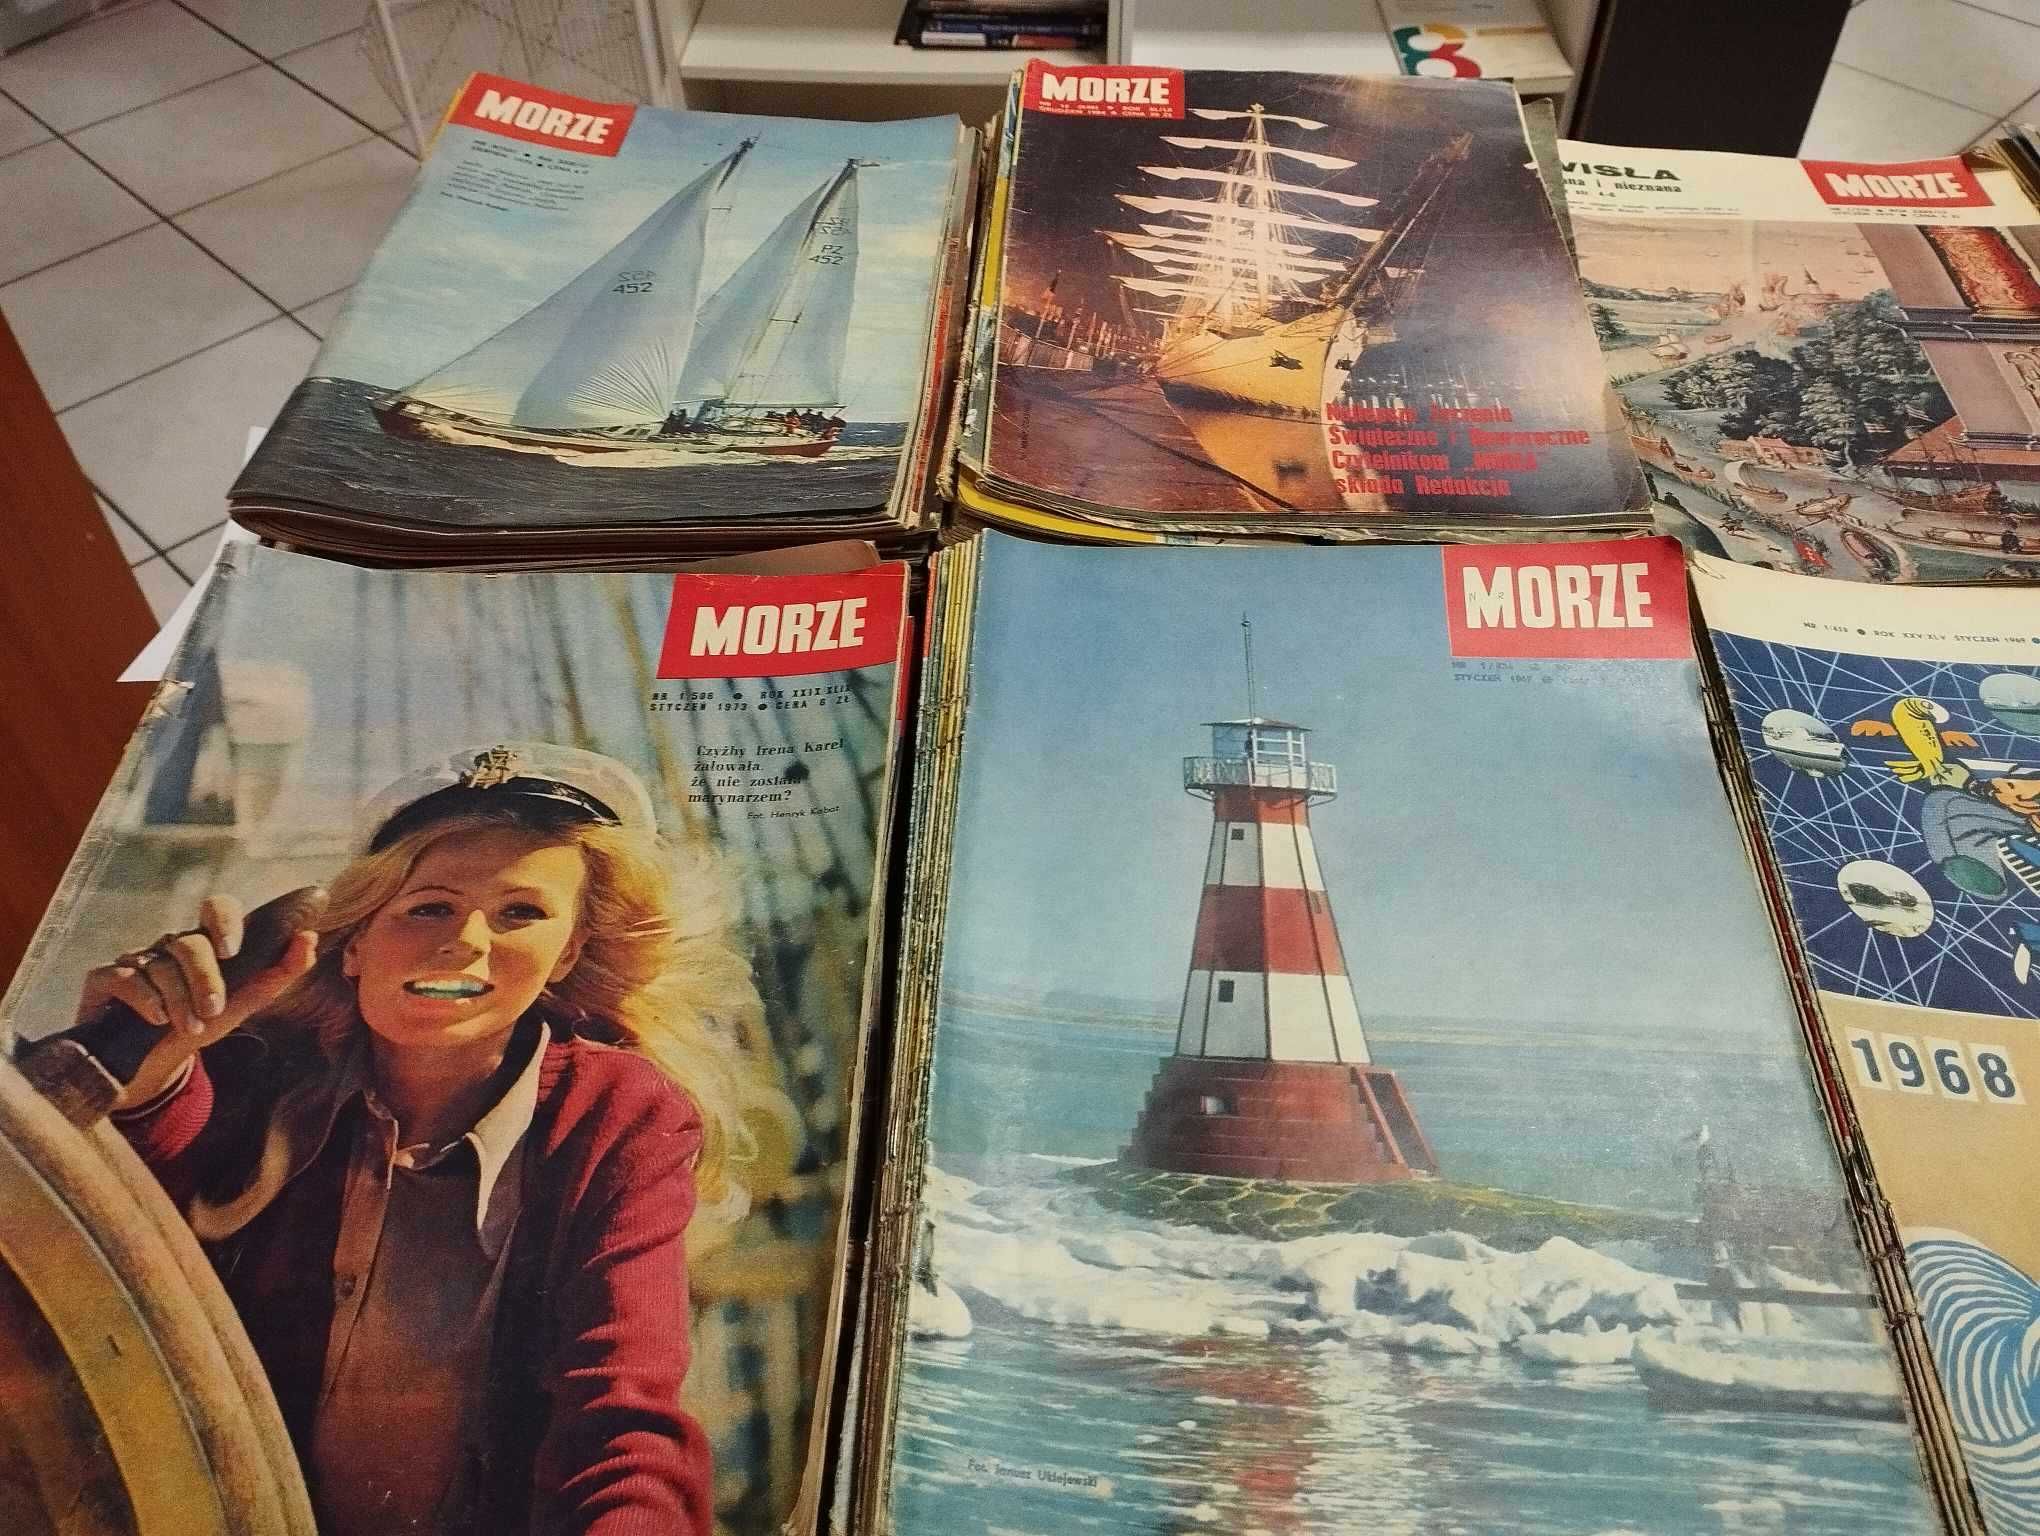 Ogromna kolekcja czasopisma Morze